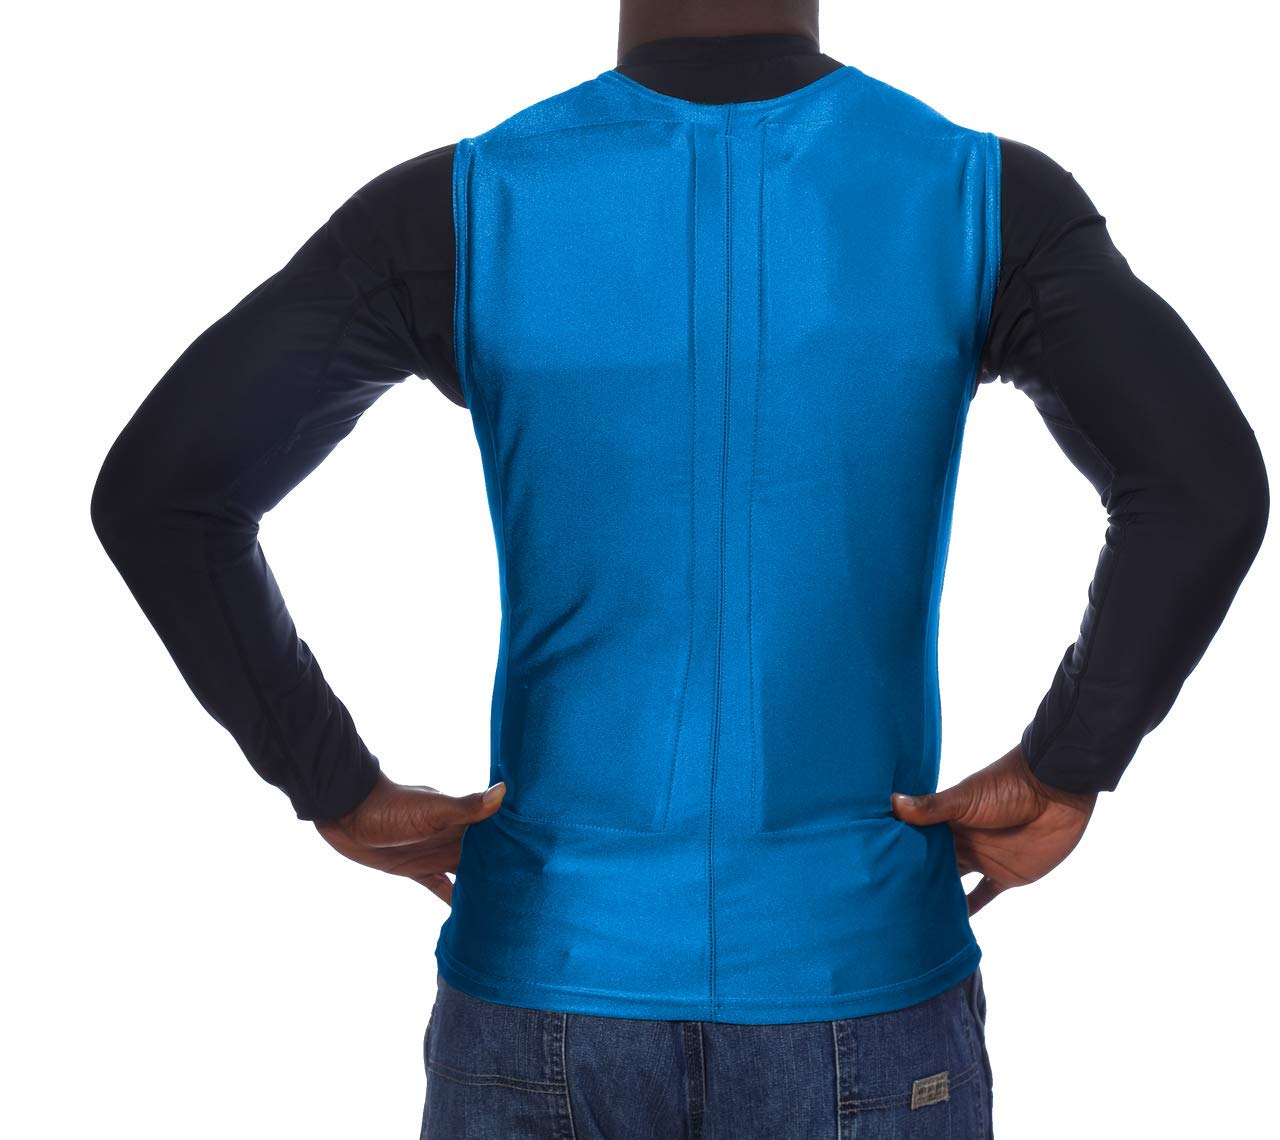 Glacier Tek Flex Cool Vest with Nontoxic Cooling Packs